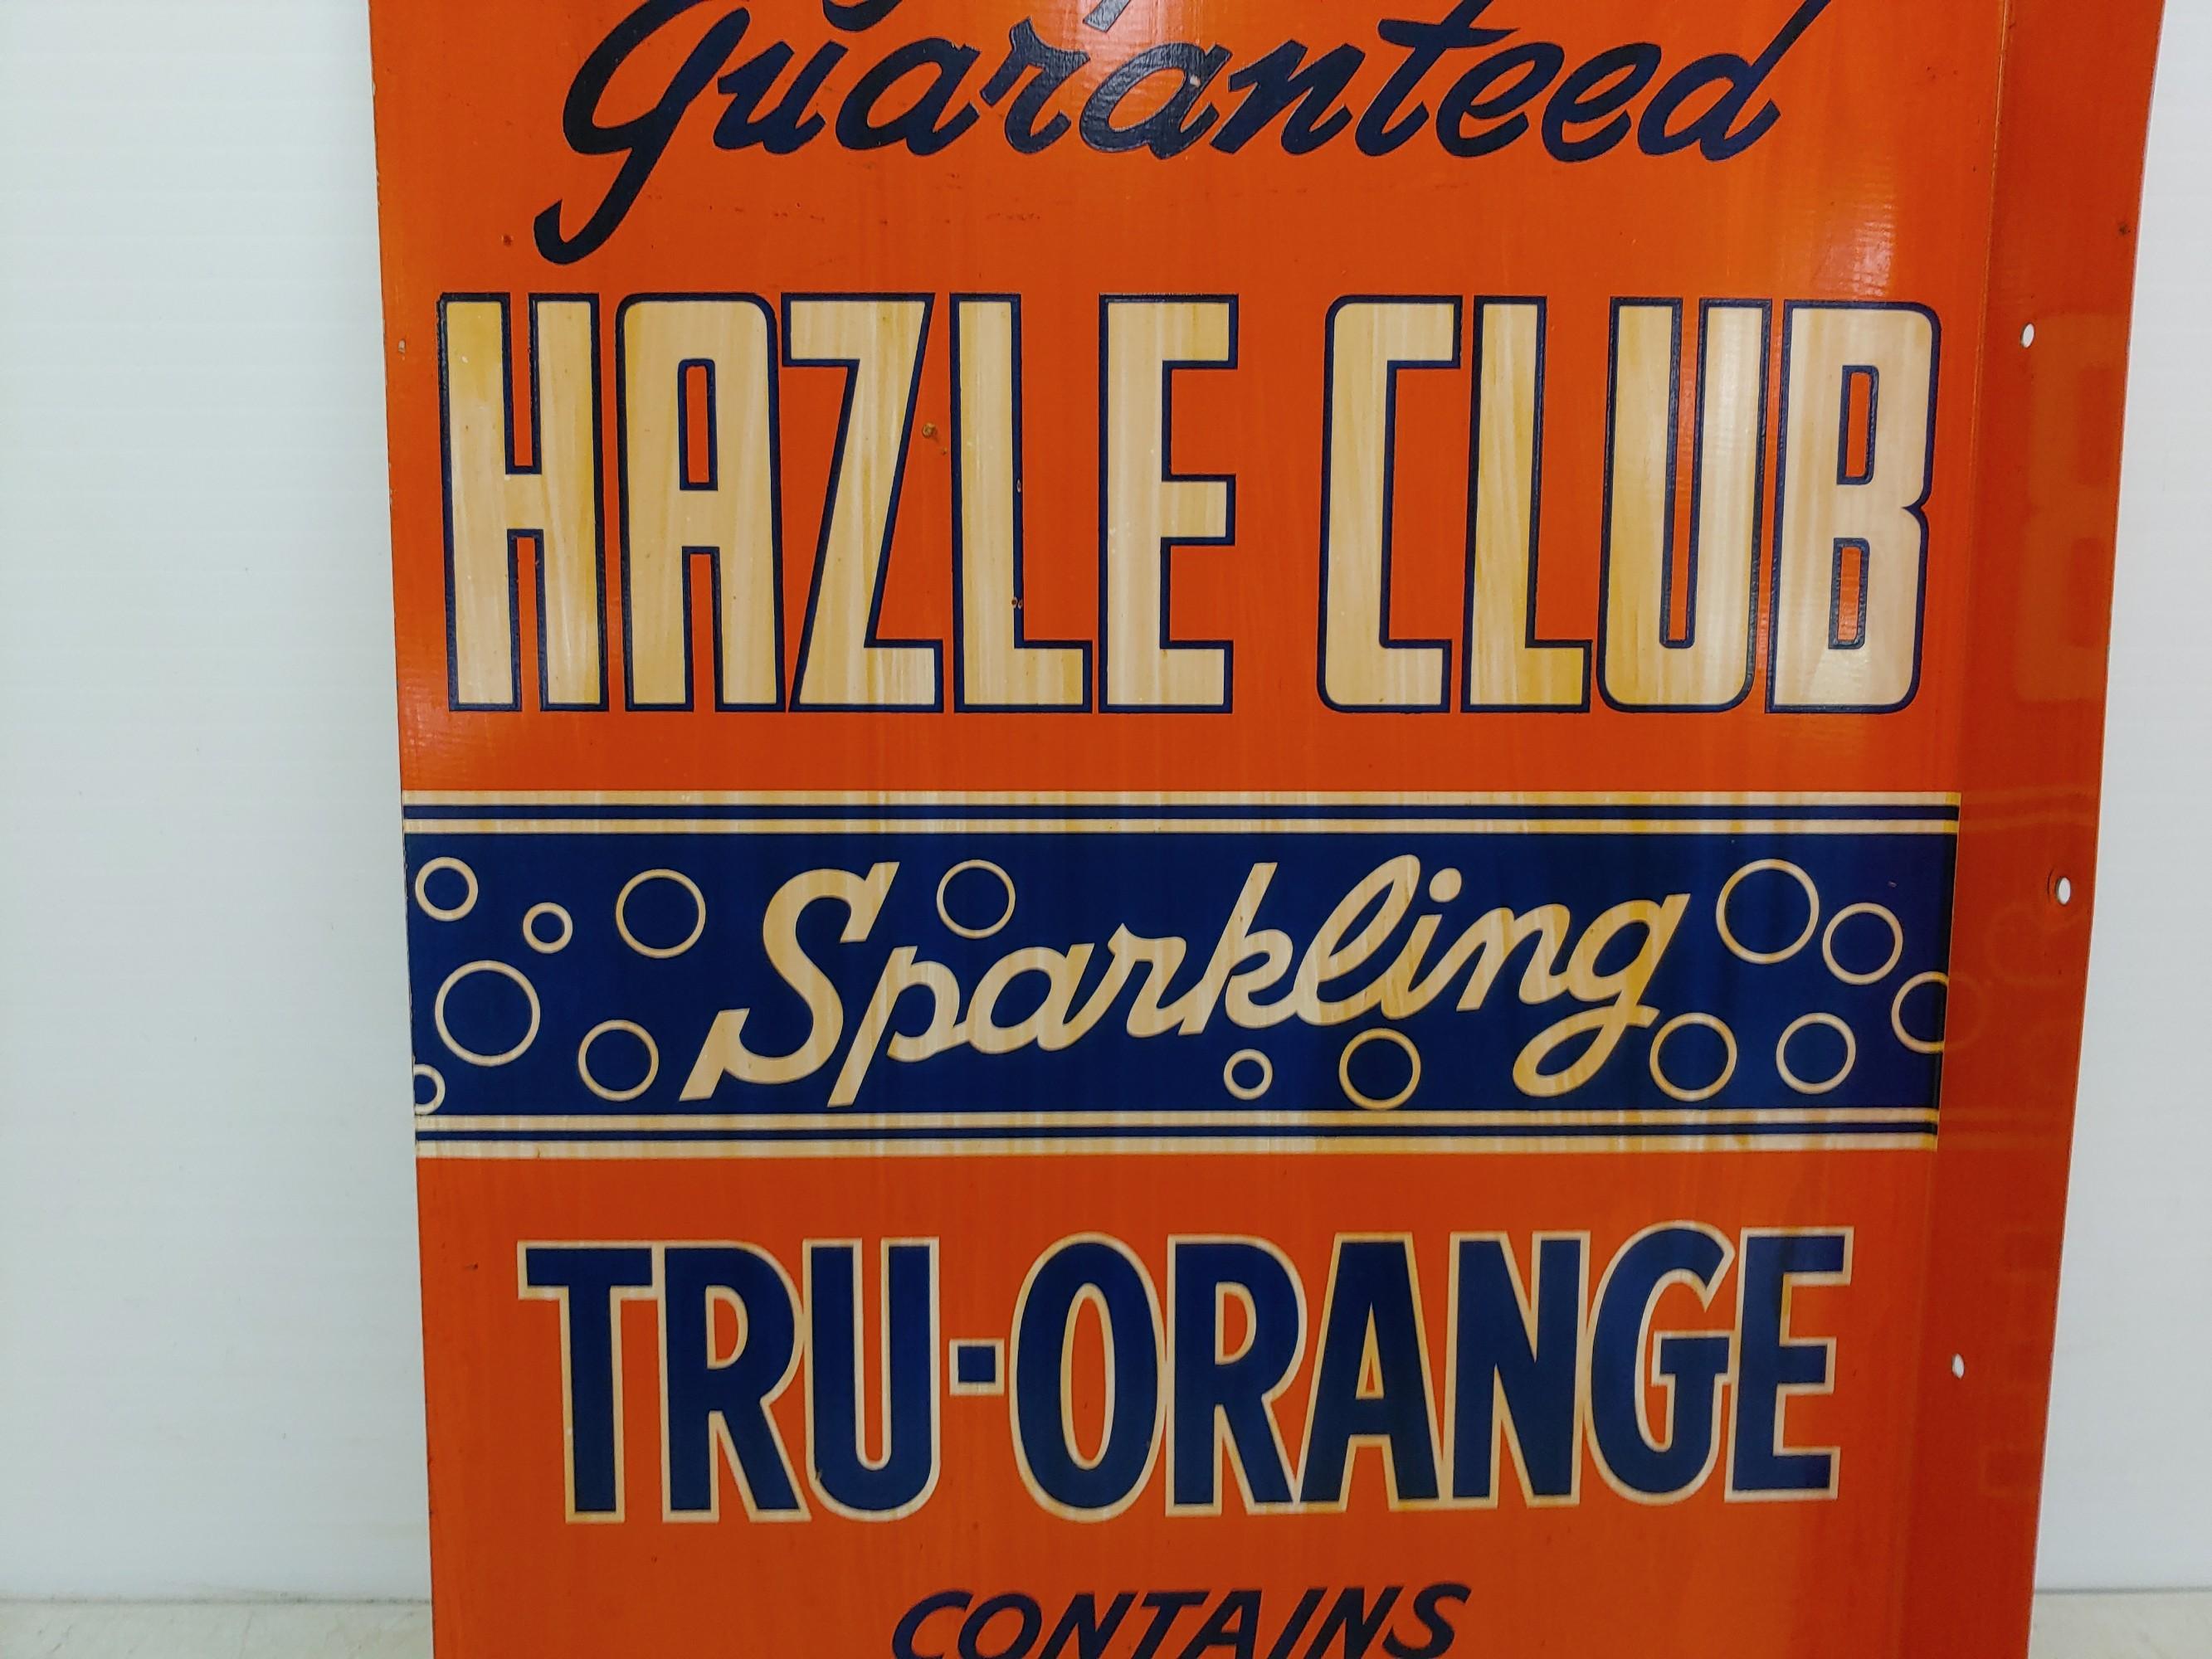 DST Flanged Hazle Club Tru-Orange soda sign